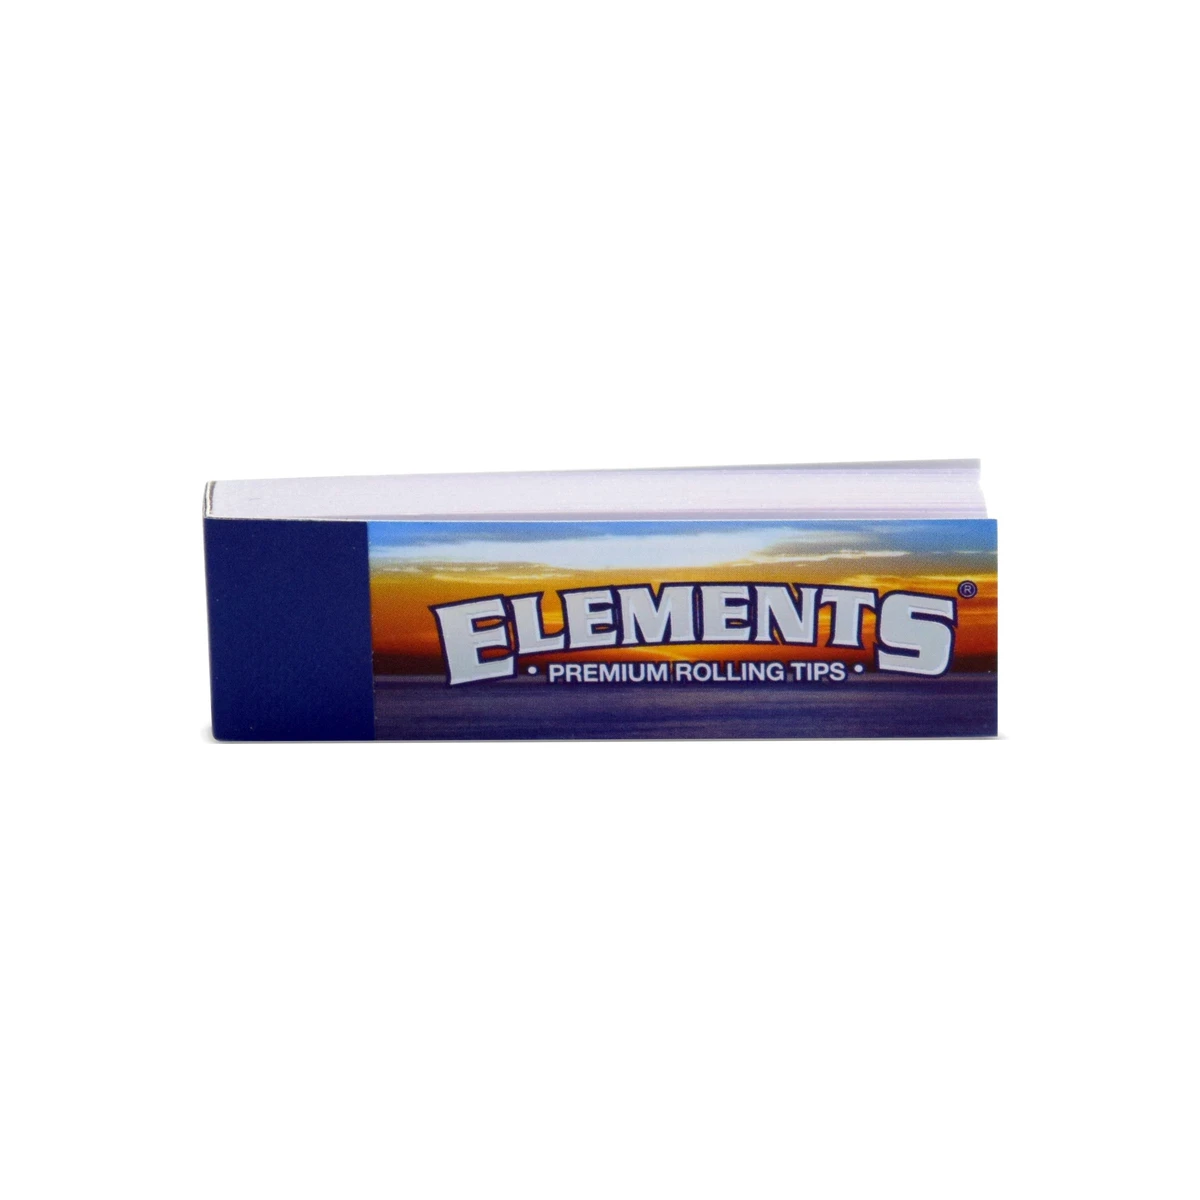 Elements Premium Rolling Tips - 50/Booklet